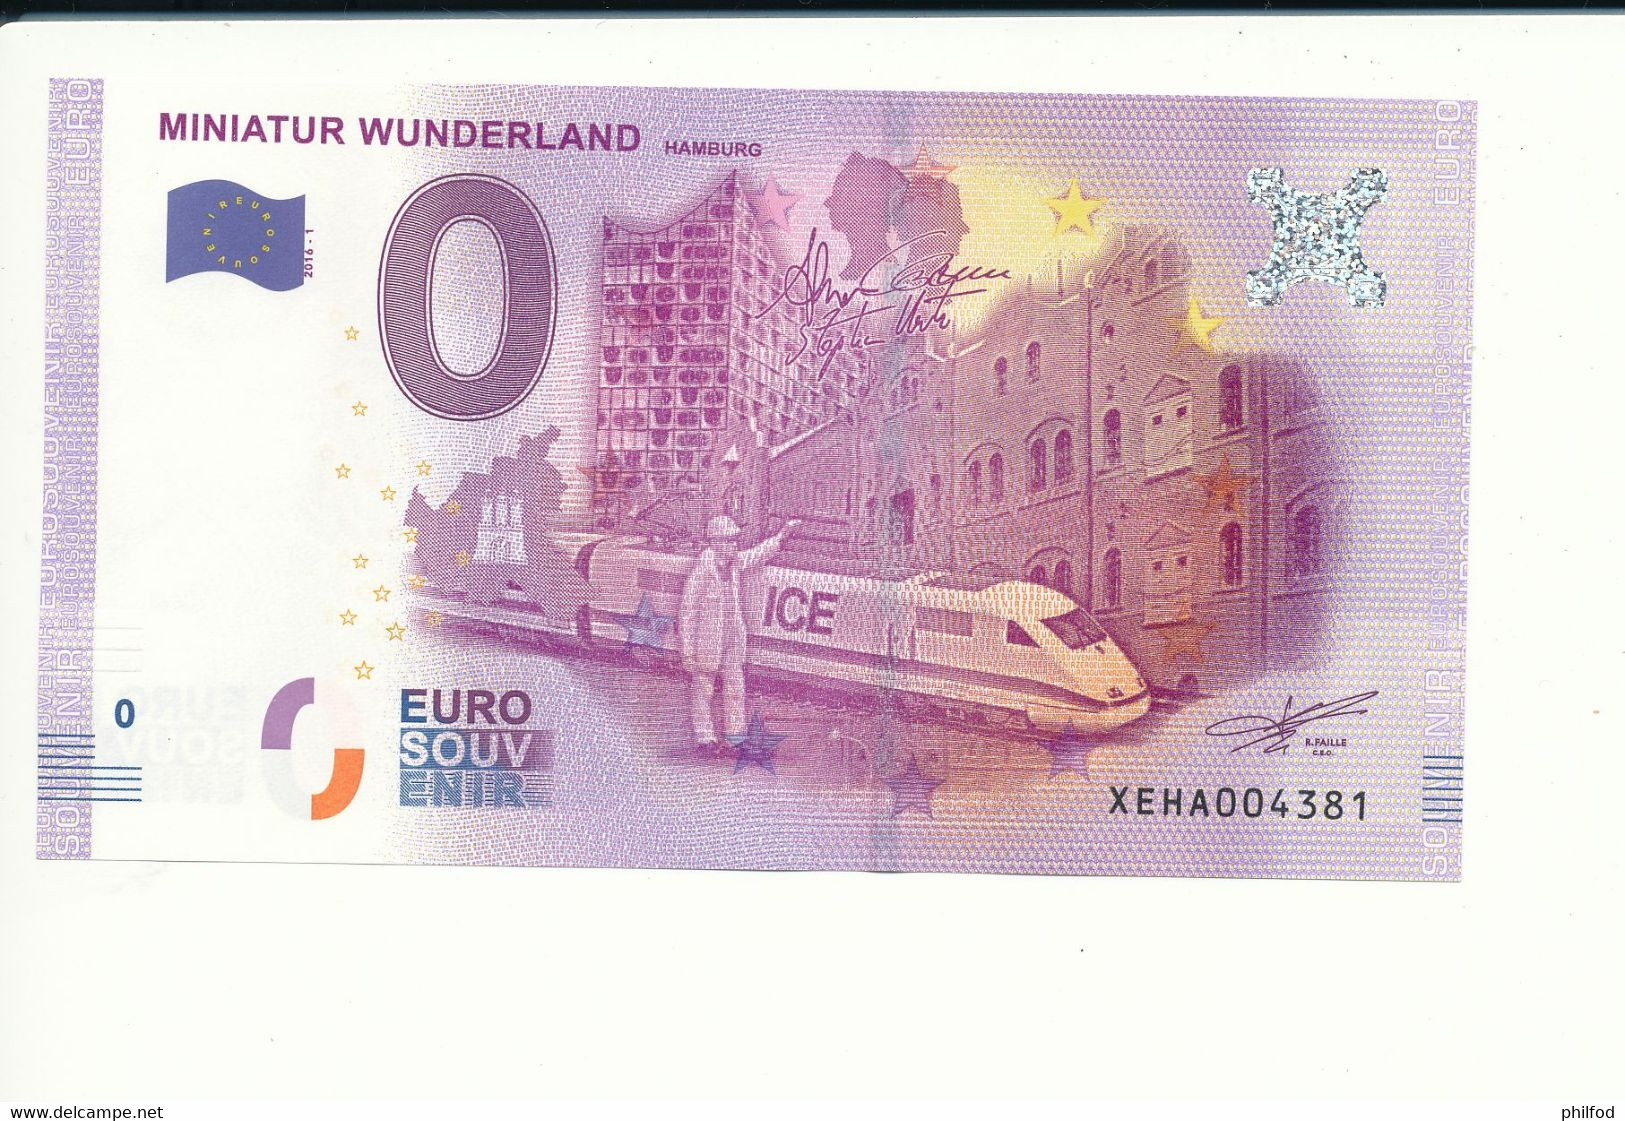 Billet Souvenir - 0 Euro - XEHA - 2016- 1 - MINIATUR WUNDERLAND HAMBURG - N° 4381 - Billet épuisé - Kilowaar - Bankbiljetten